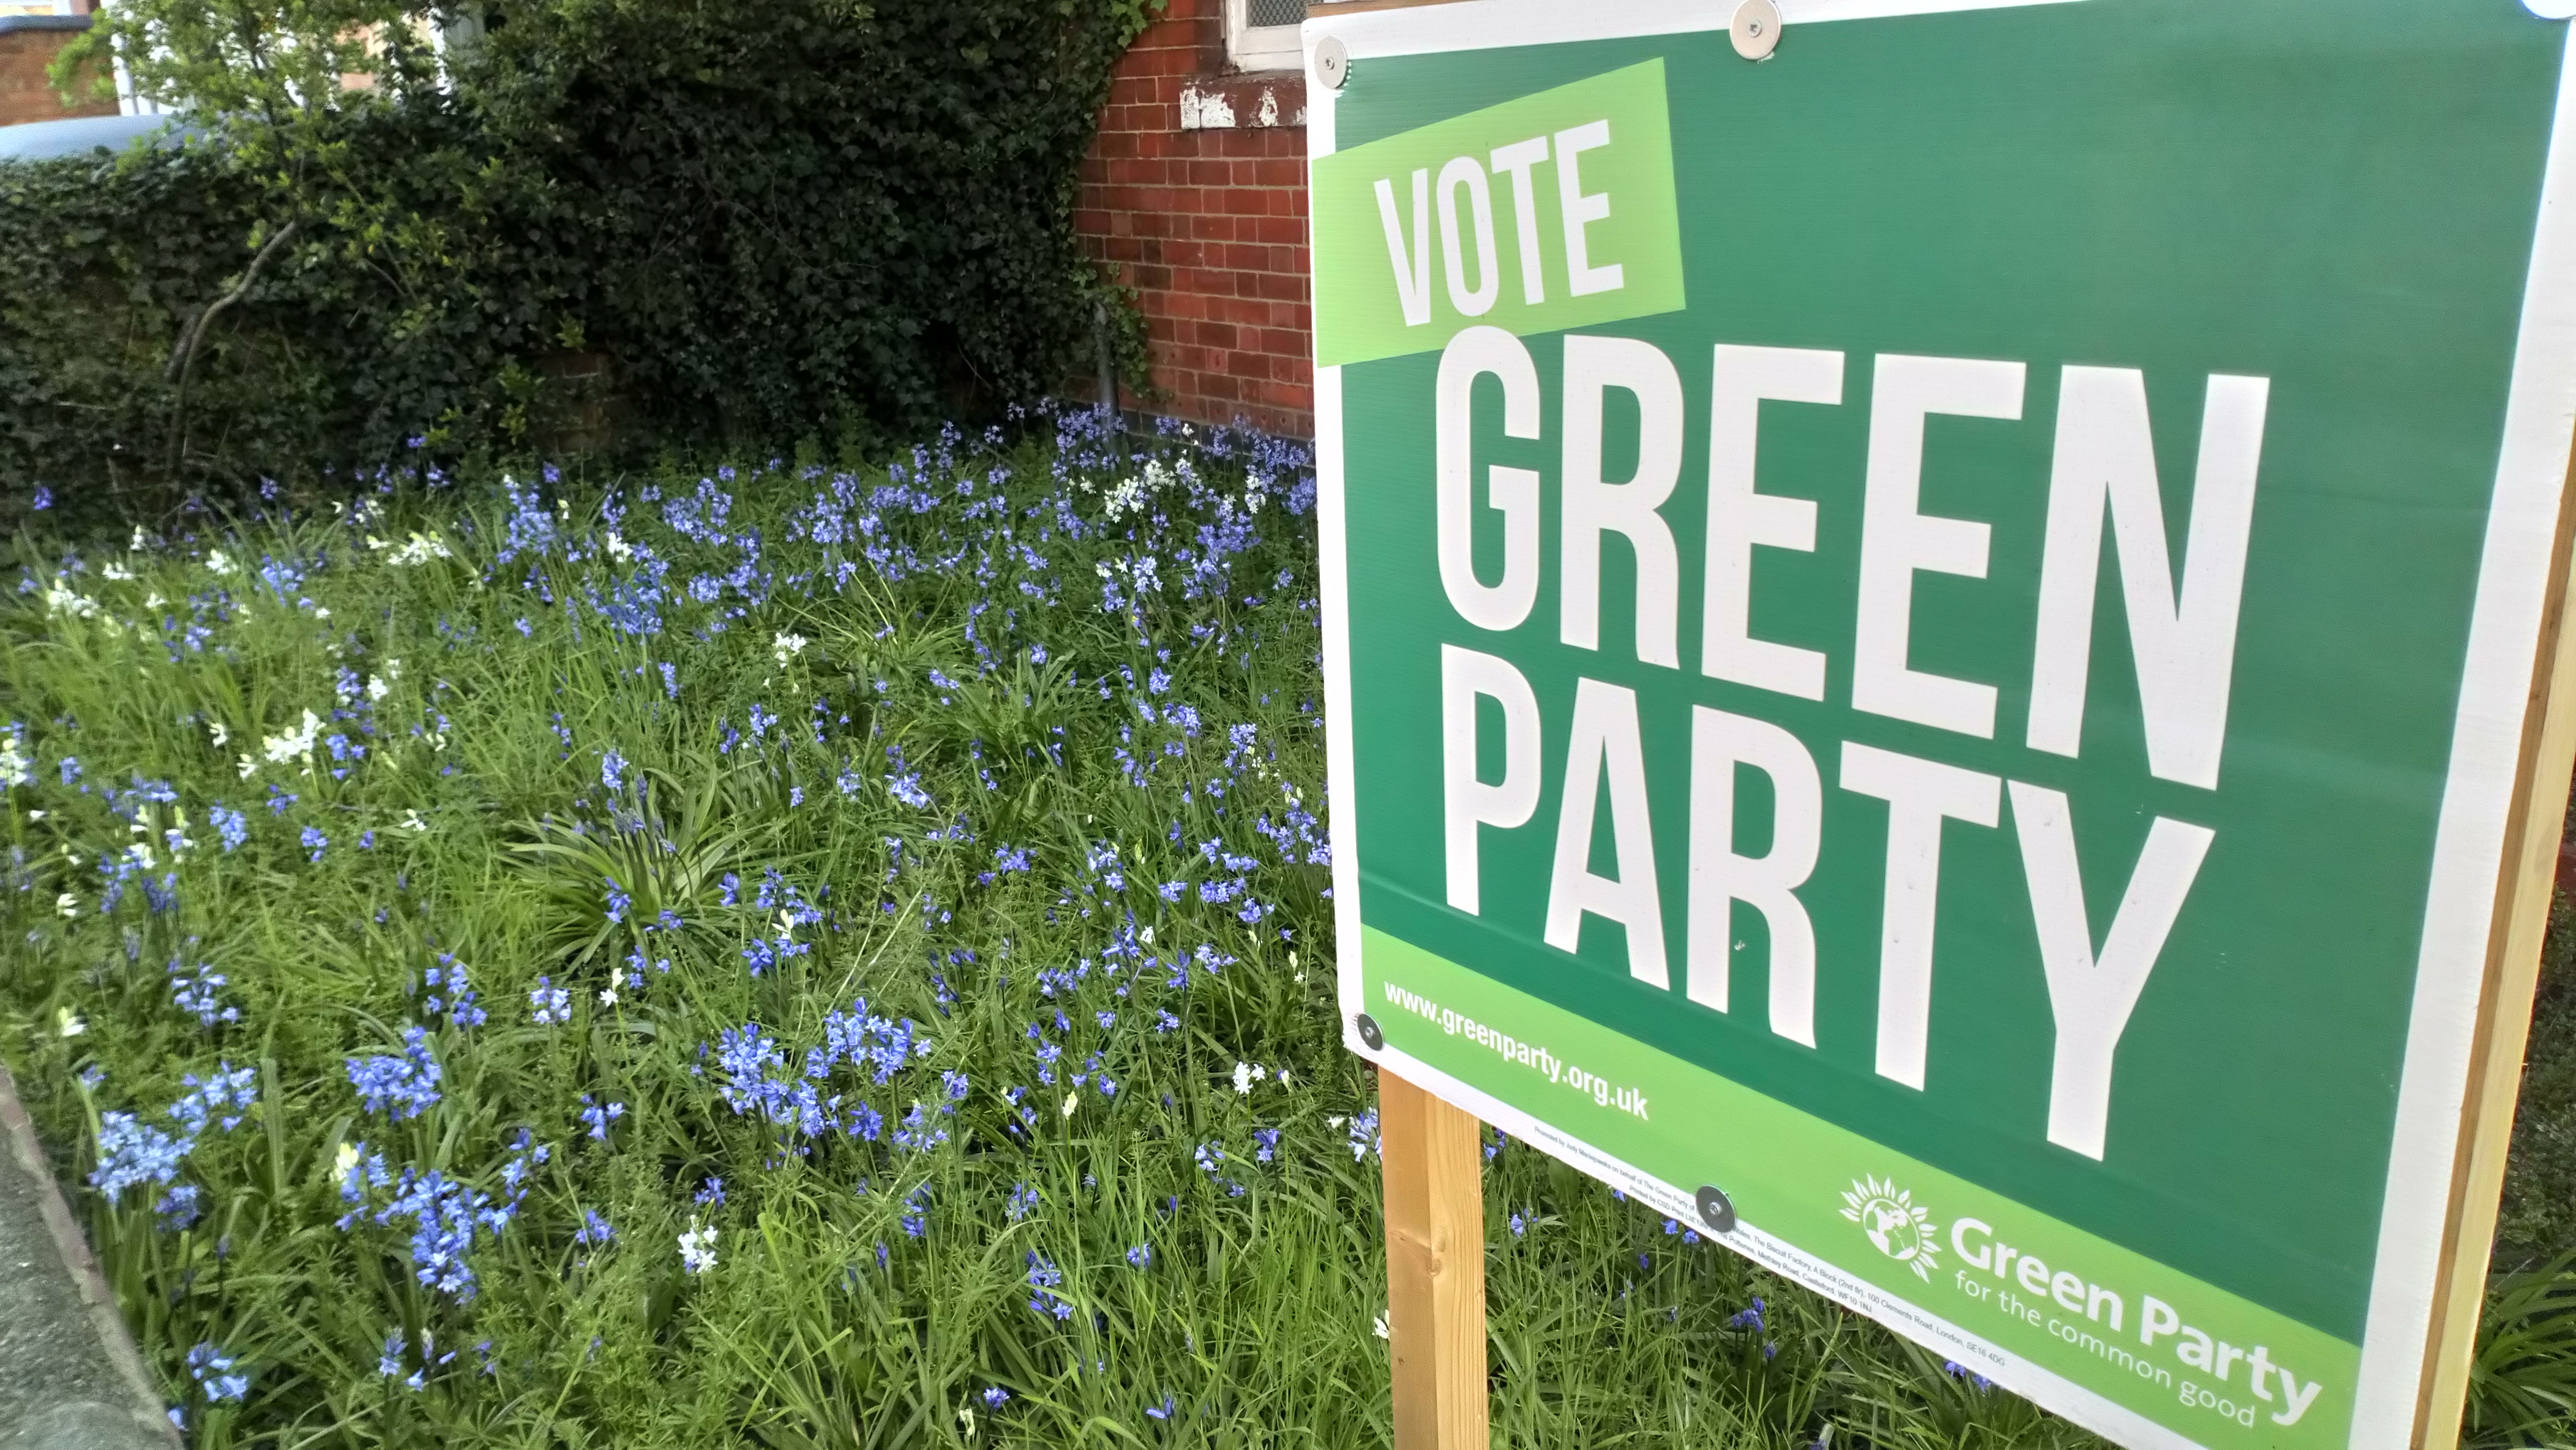 Vote green corex board in garden